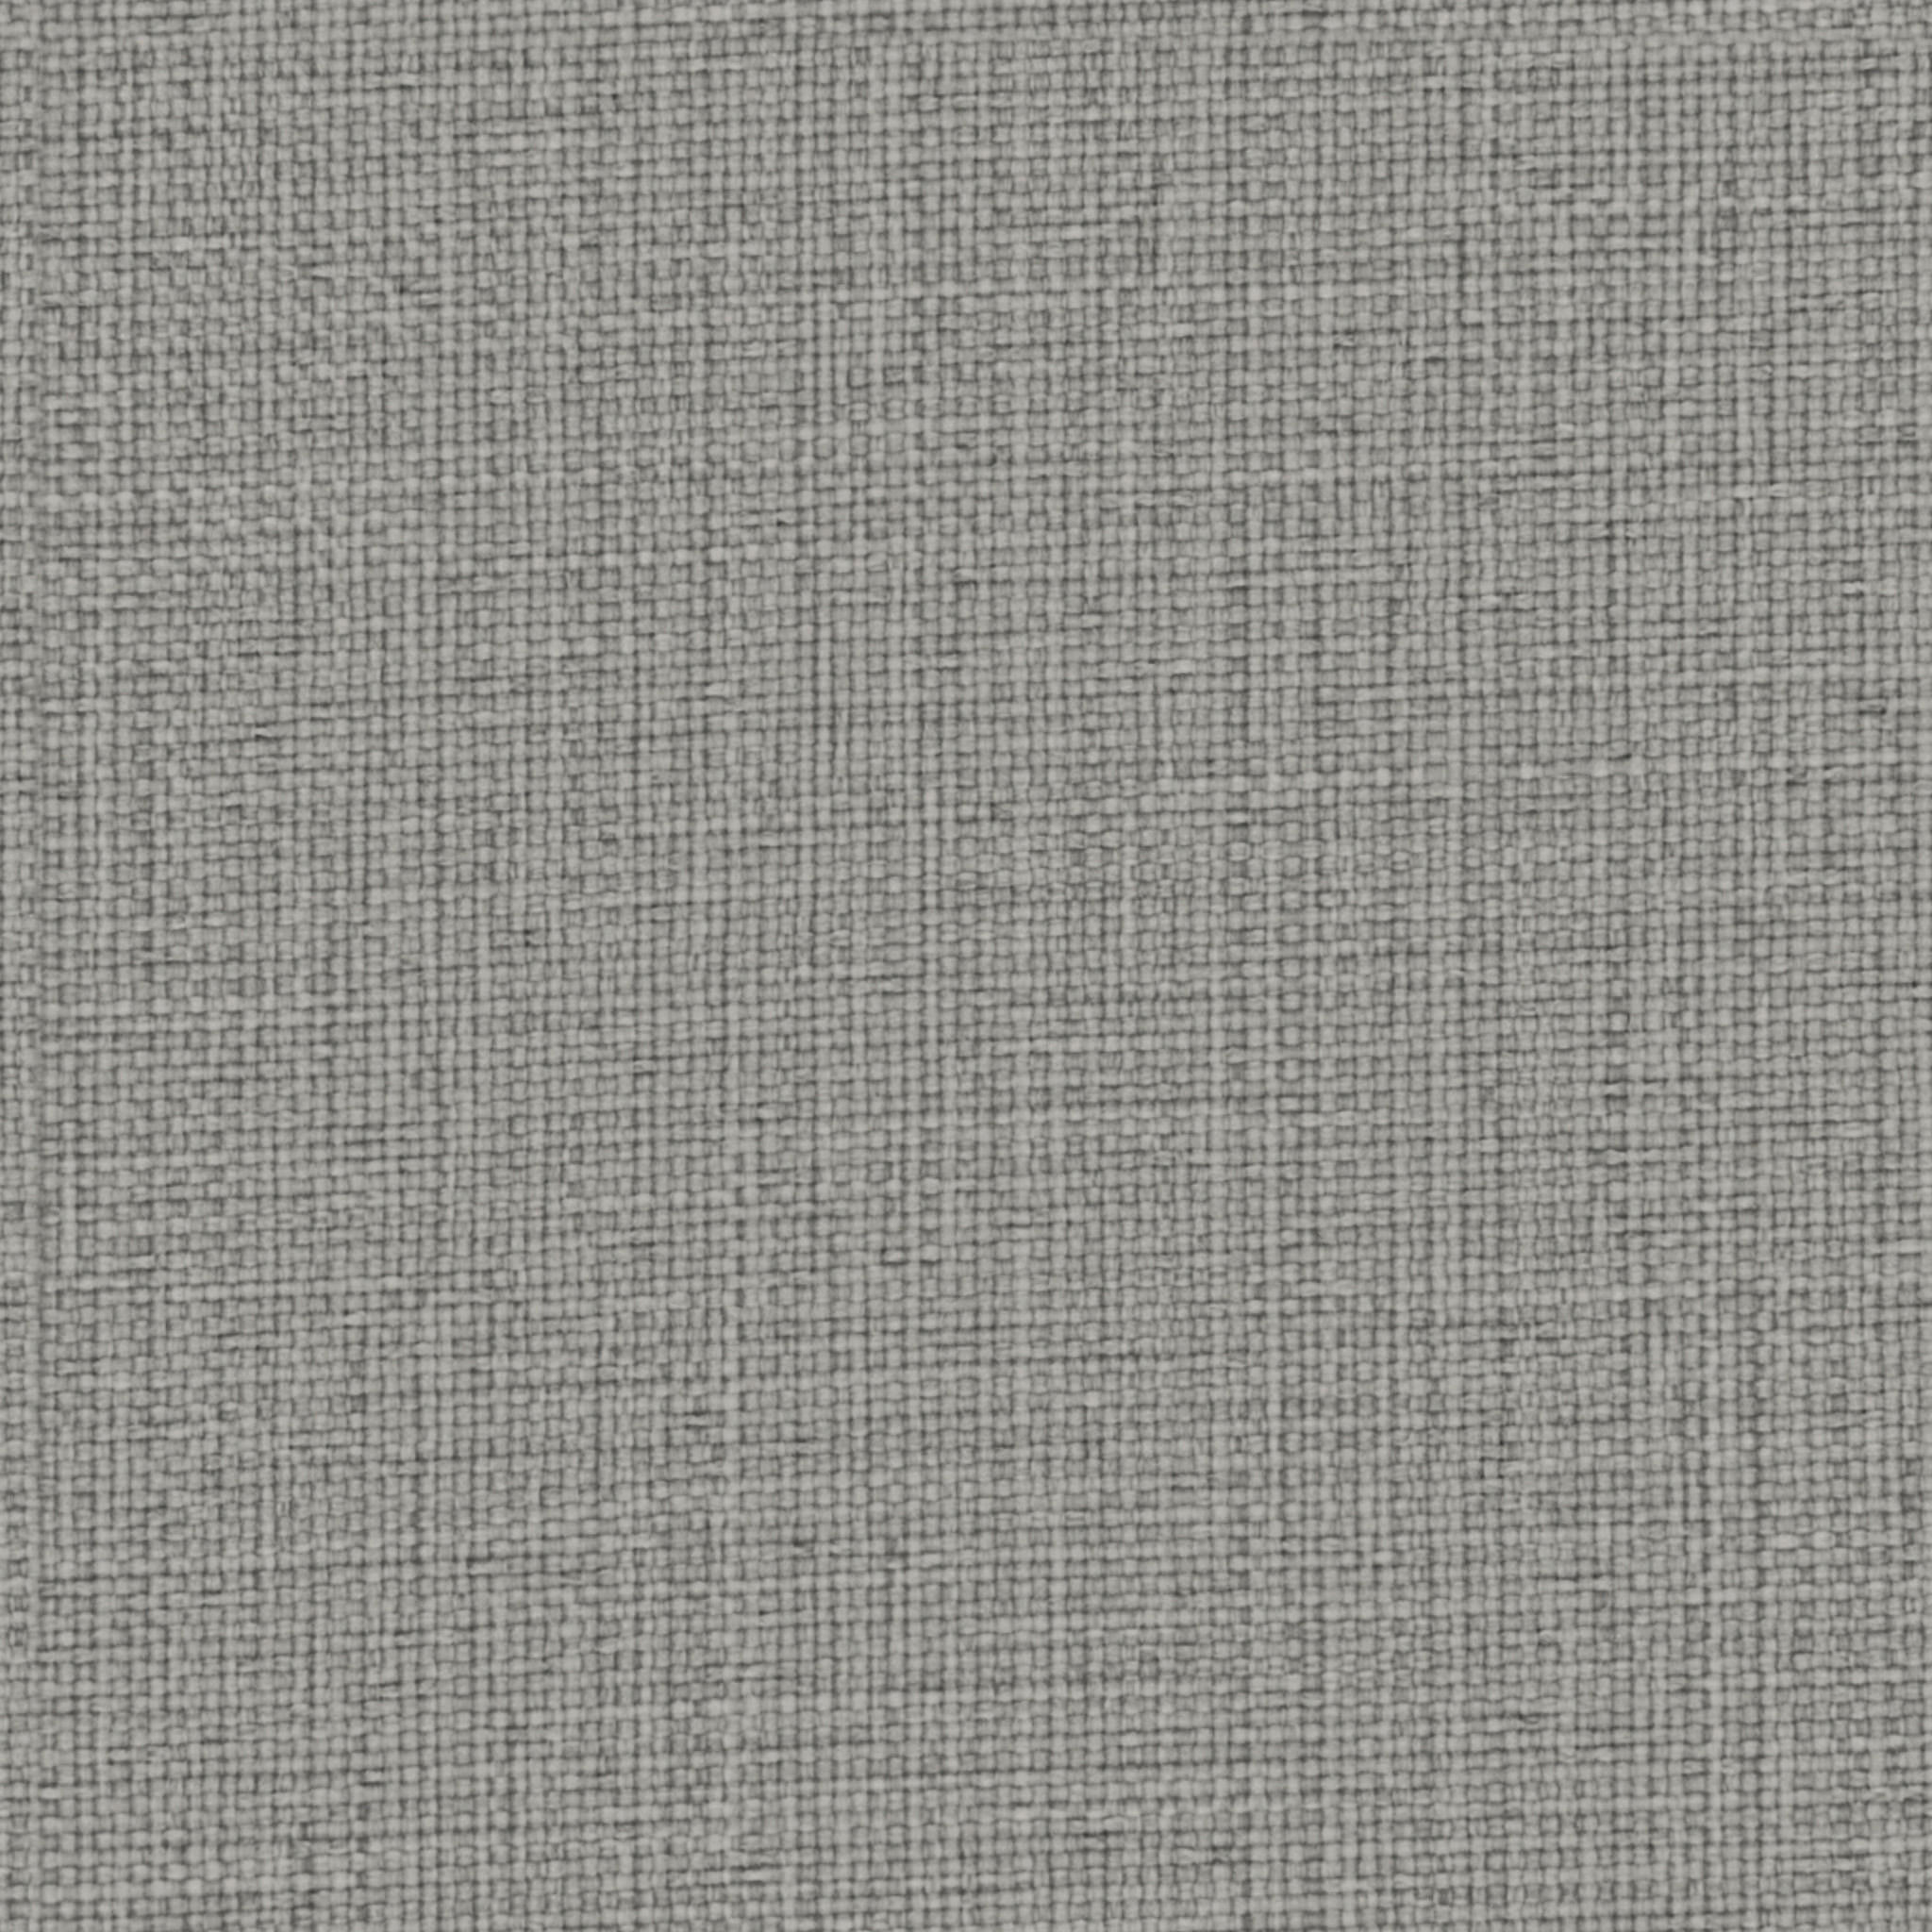 BETTBANK in Textil Anthrazit, Grau  - Anthrazit/Grau, Design, Textil/Metall (144/38/44cm) - Hasena